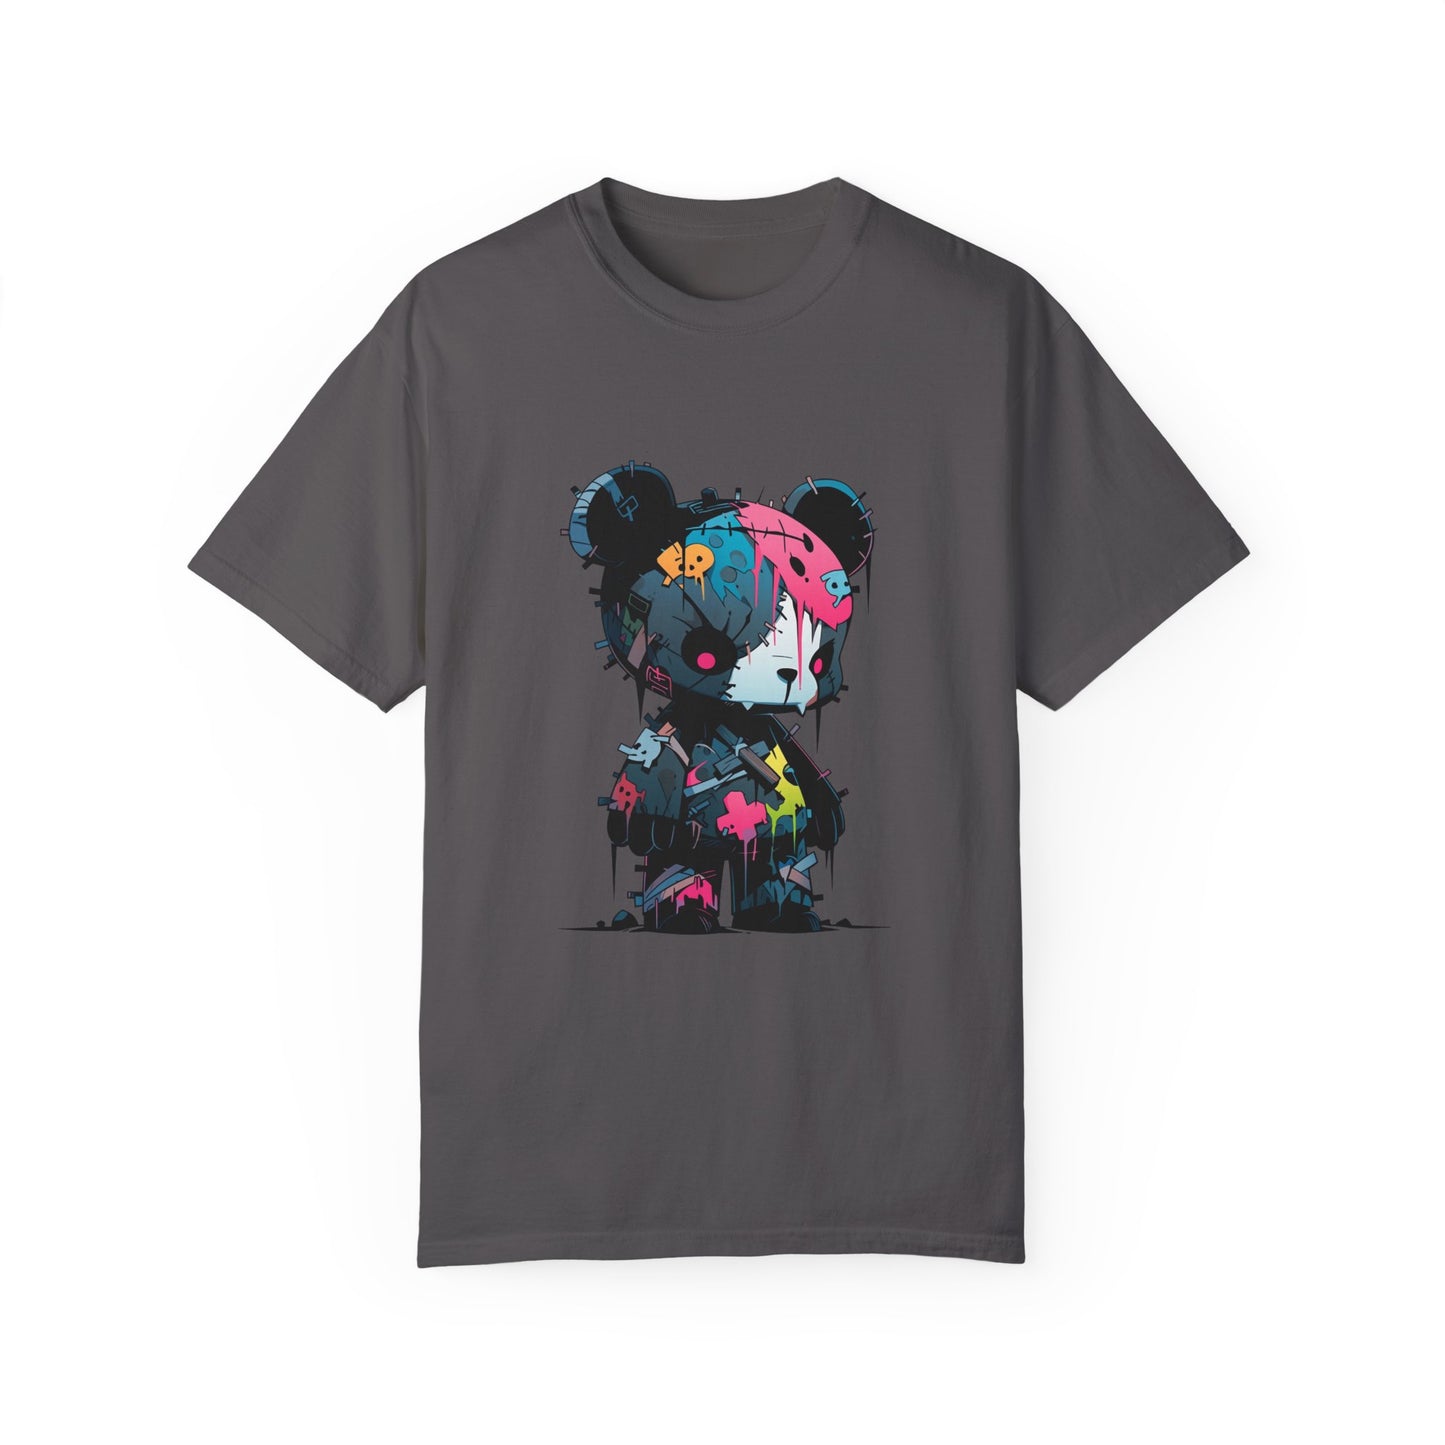 Hip Hop Teddy Bear Graphic Unisex Garment-dyed T-shirt Cotton Funny Humorous Graphic Soft Premium Unisex Men Women Graphite T-shirt Birthday Gift-8